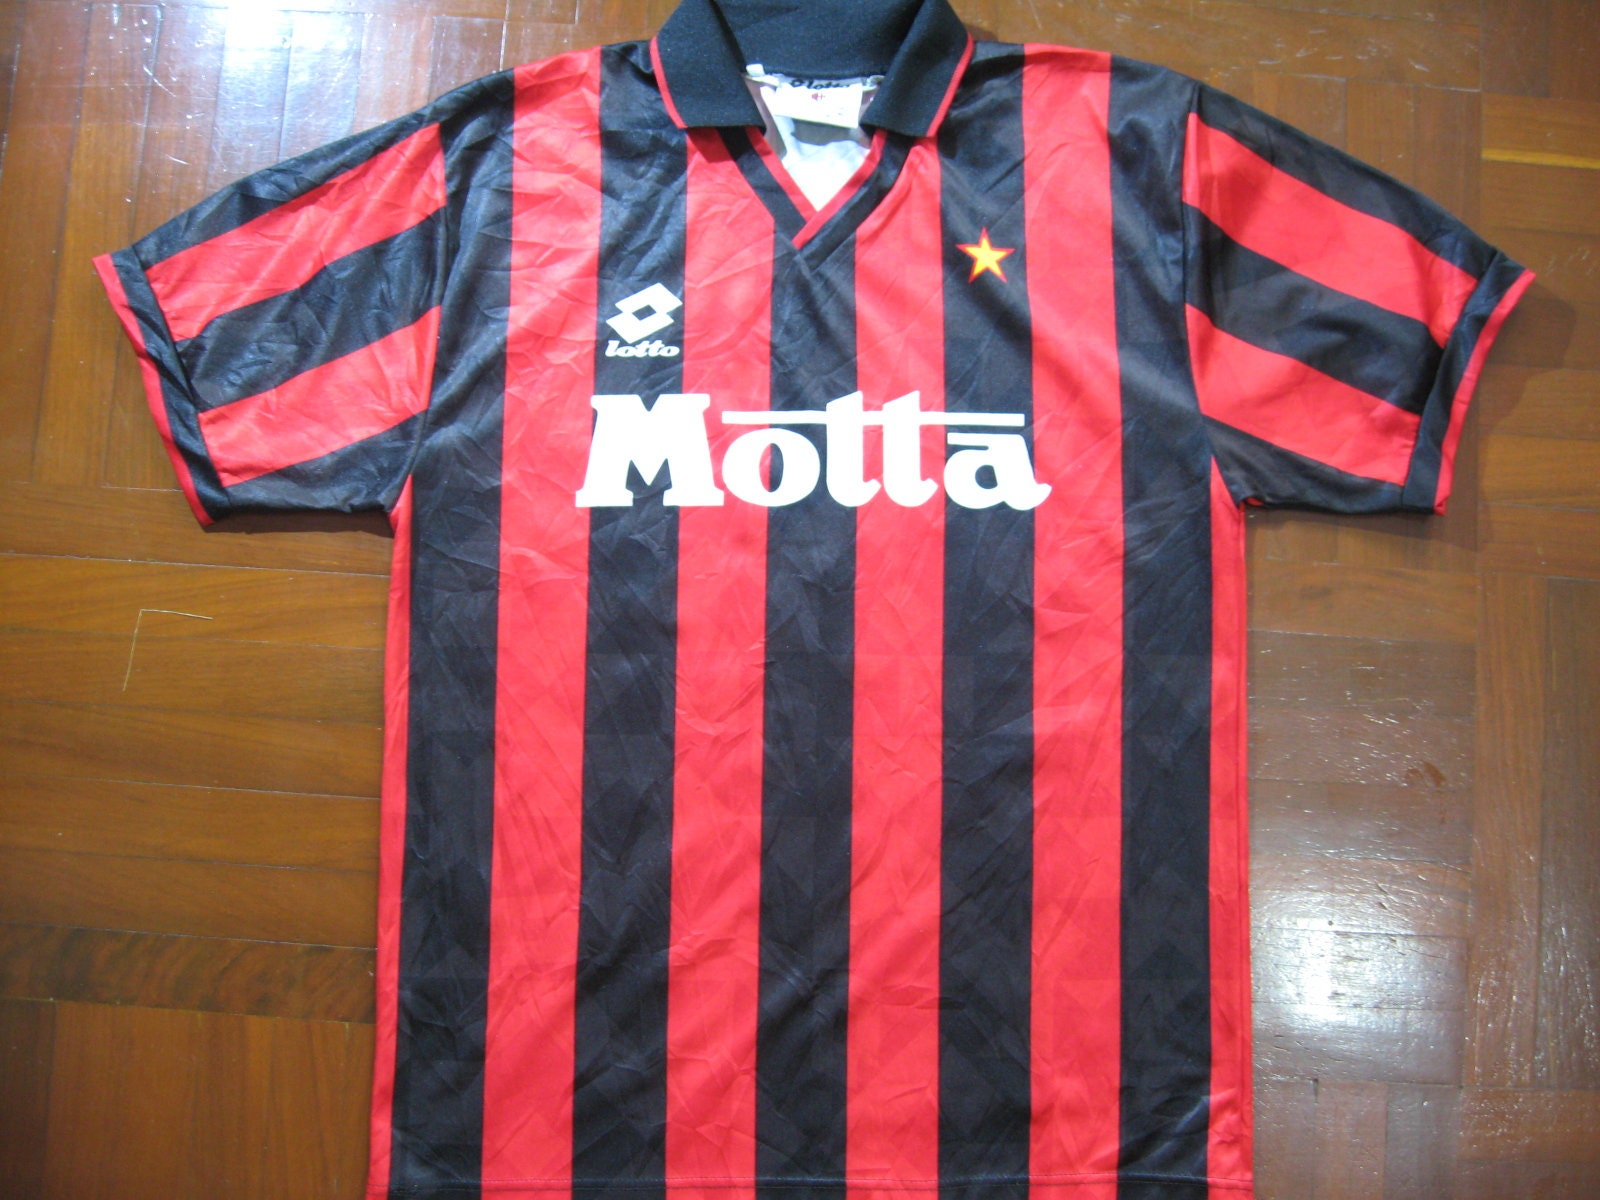 1997-1998 AC Milan Lotto Home Shirt #30 Leonardo - Marketplace, Classic  Football Shirts, Vintage Football Shirts, Rare Soccer Shirts, Worldwide  Delivery, 90's Football Shirts